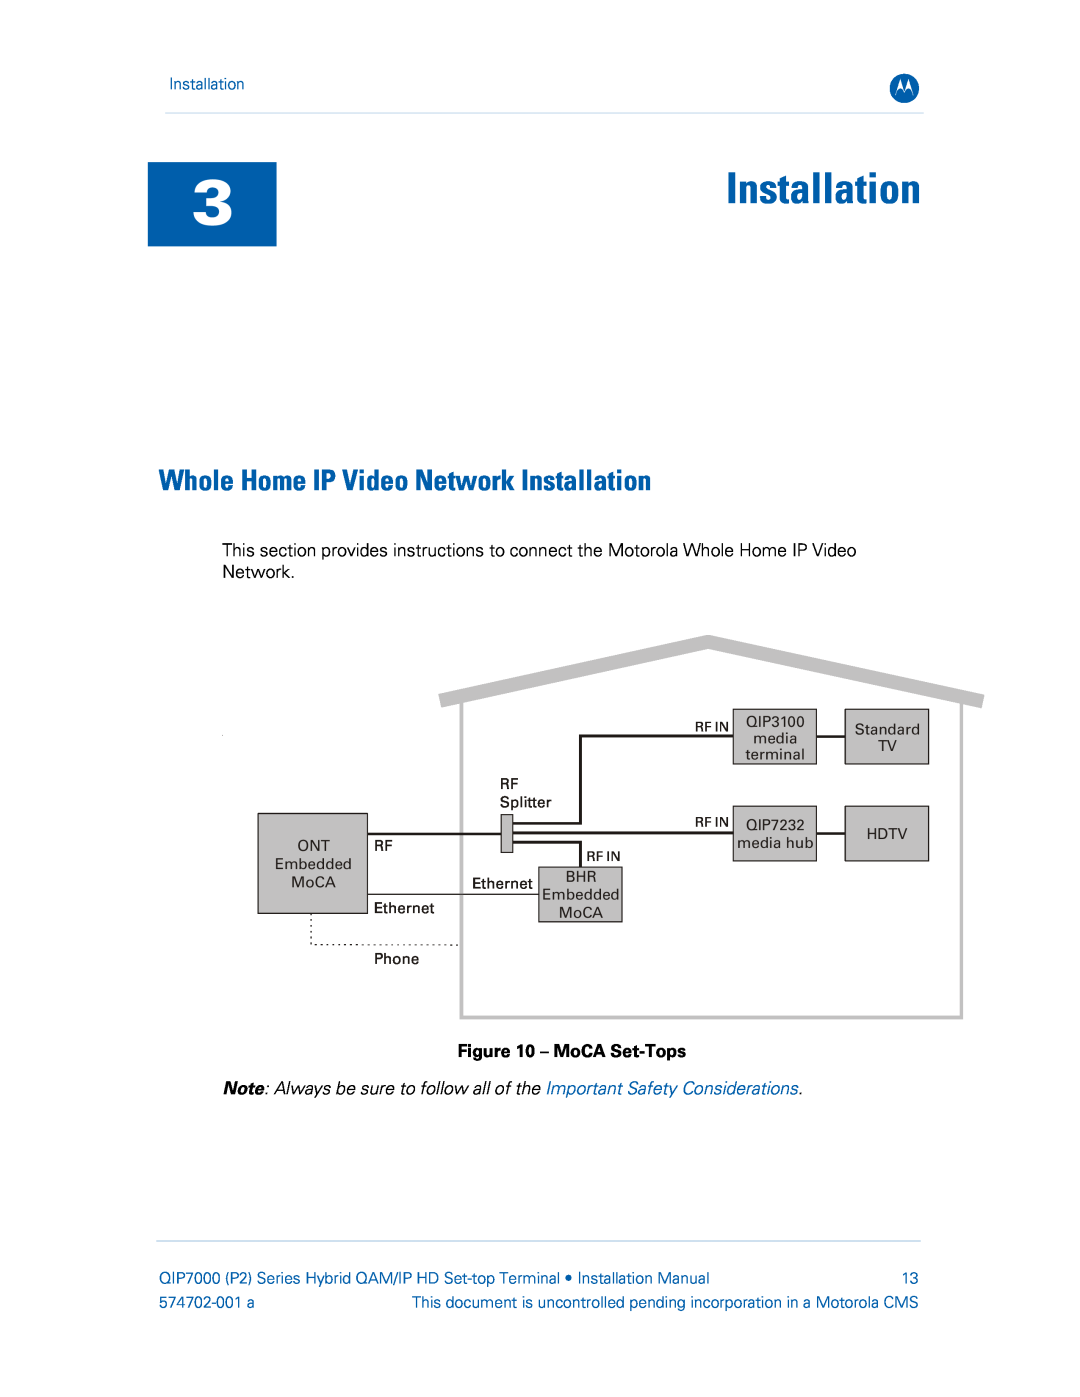 Motorola QIP7000 installation manual Whole Home IP Video Network Installation, MoCA Set-Tops, 574702-001 a 